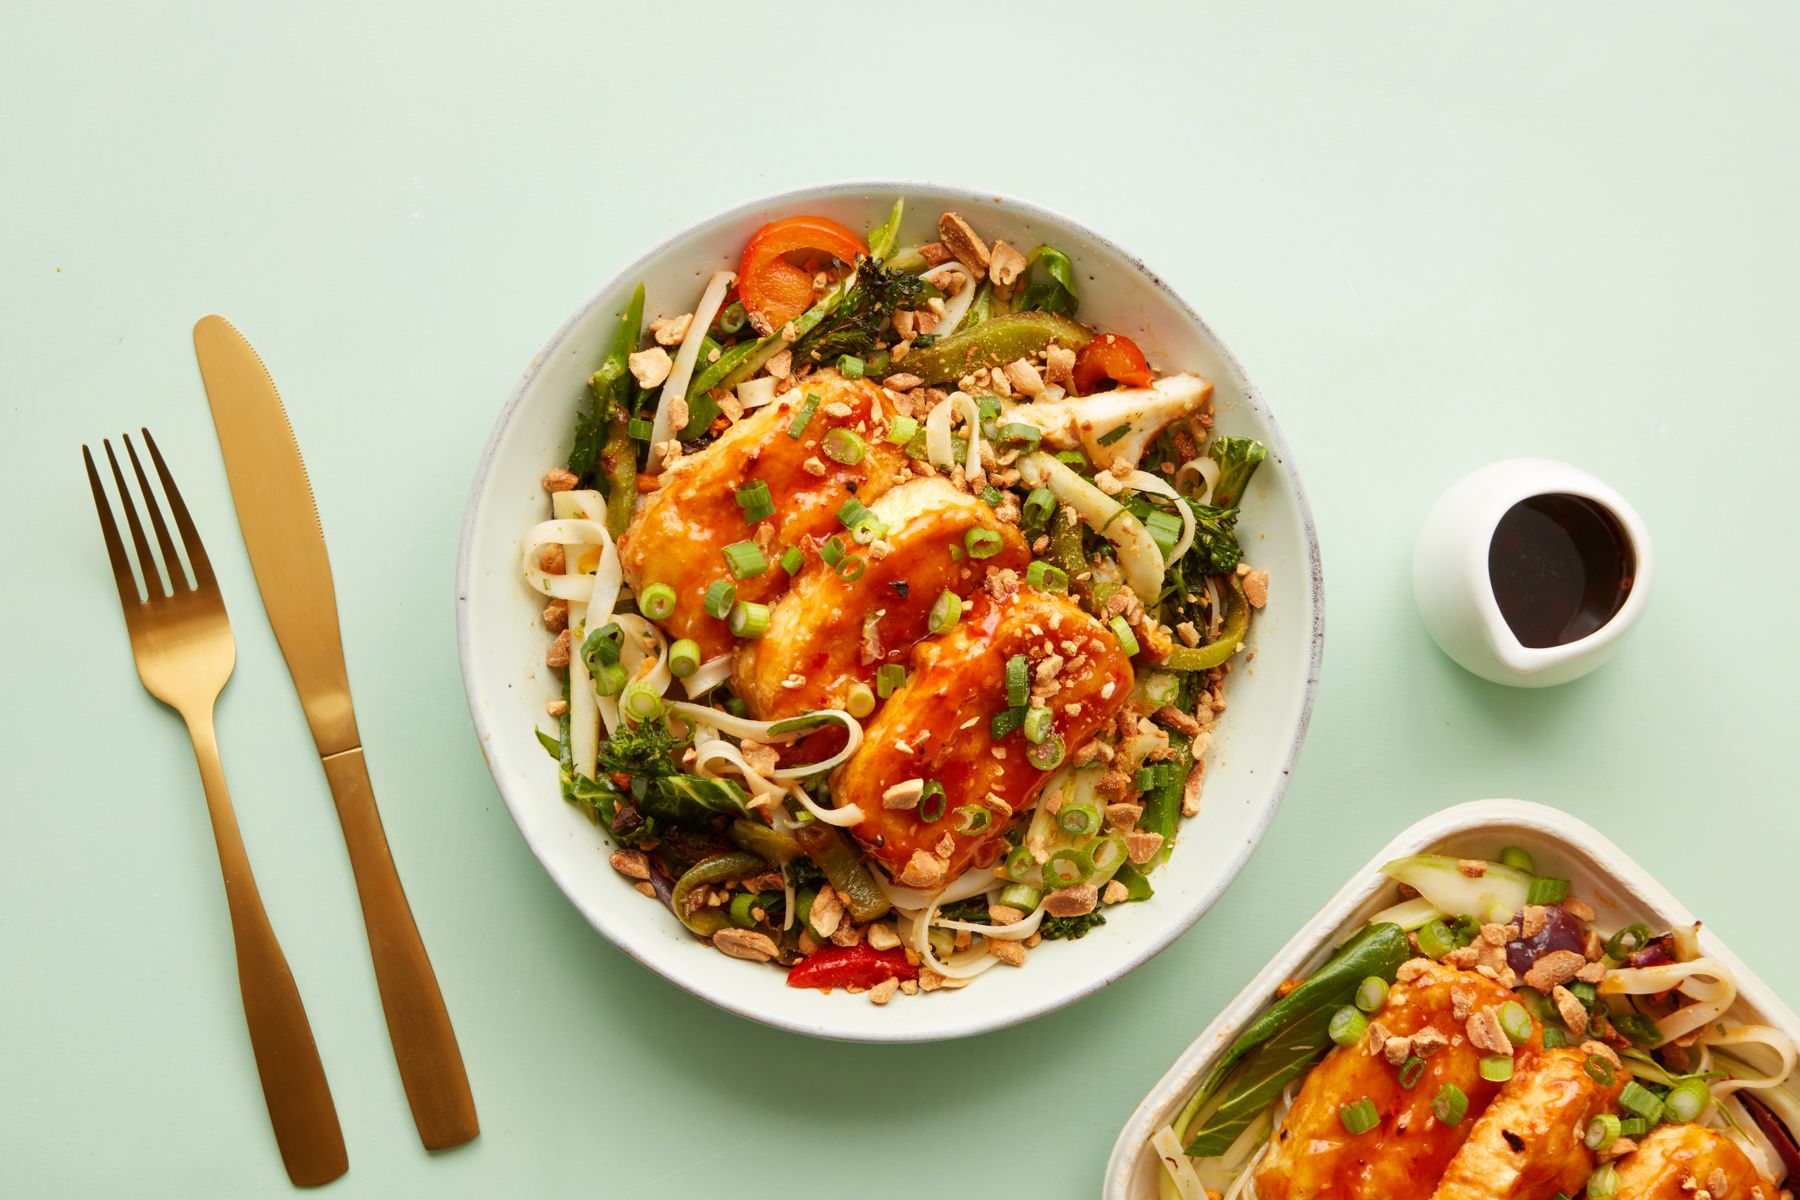 Lions prep - Taiwanese Chilli Tofu with Peanut Noodle Salad, Sesame Dressed Broccoli & Nam Jim Sauce